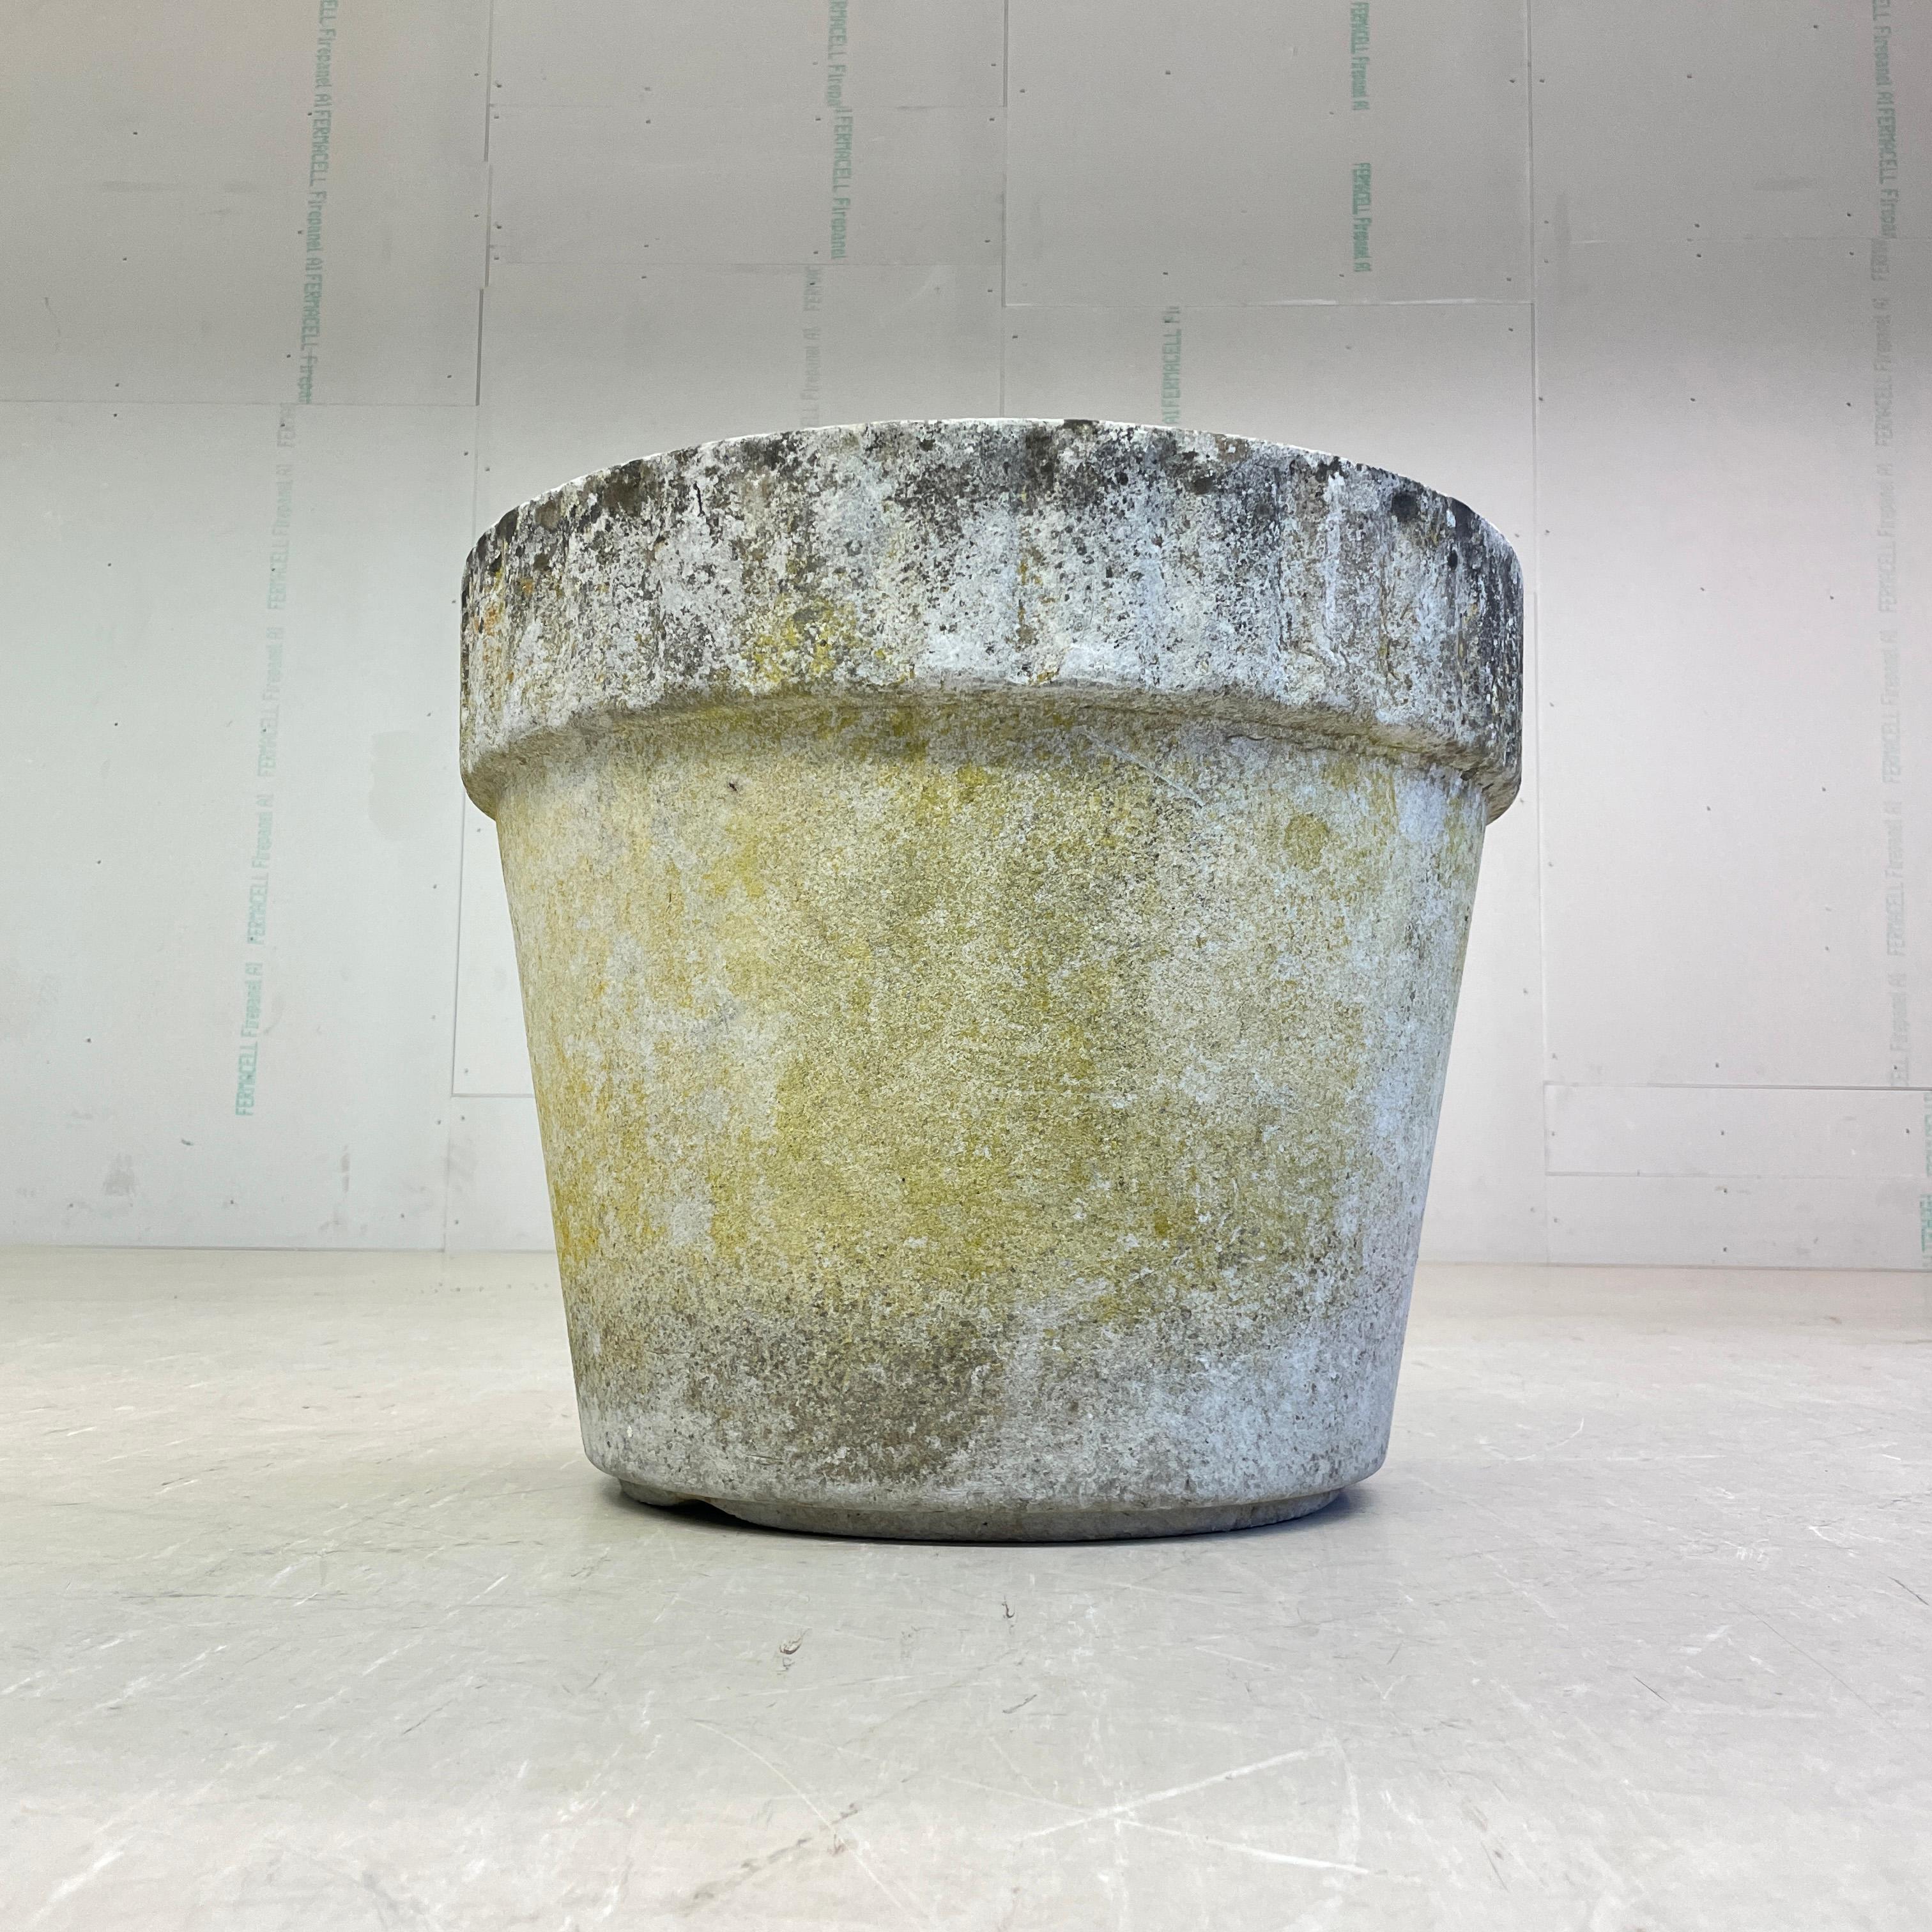 Willy Guhl Concrete Planter - Eternit AG, Switzerland #1 For Sale 1